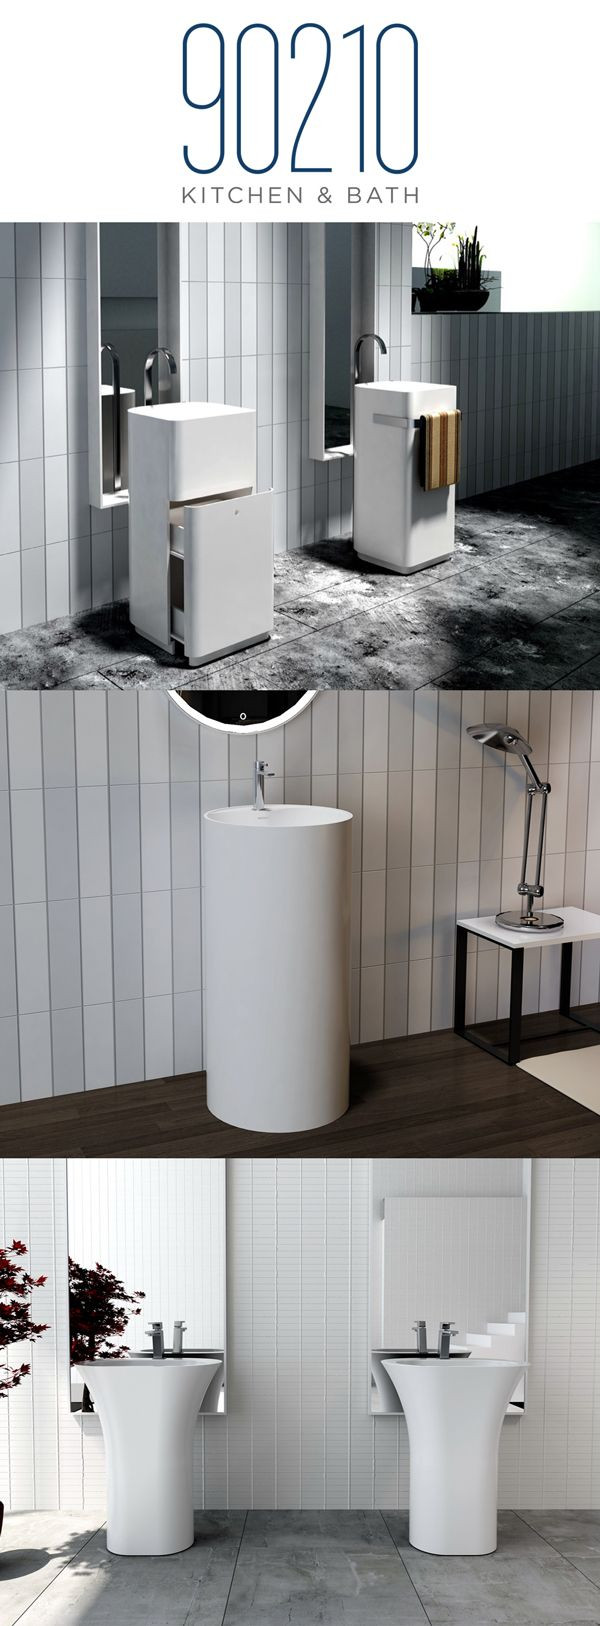 Bathroom Vanities Under $500
 Modern freestanding vessel sinks all for under $500 Shop